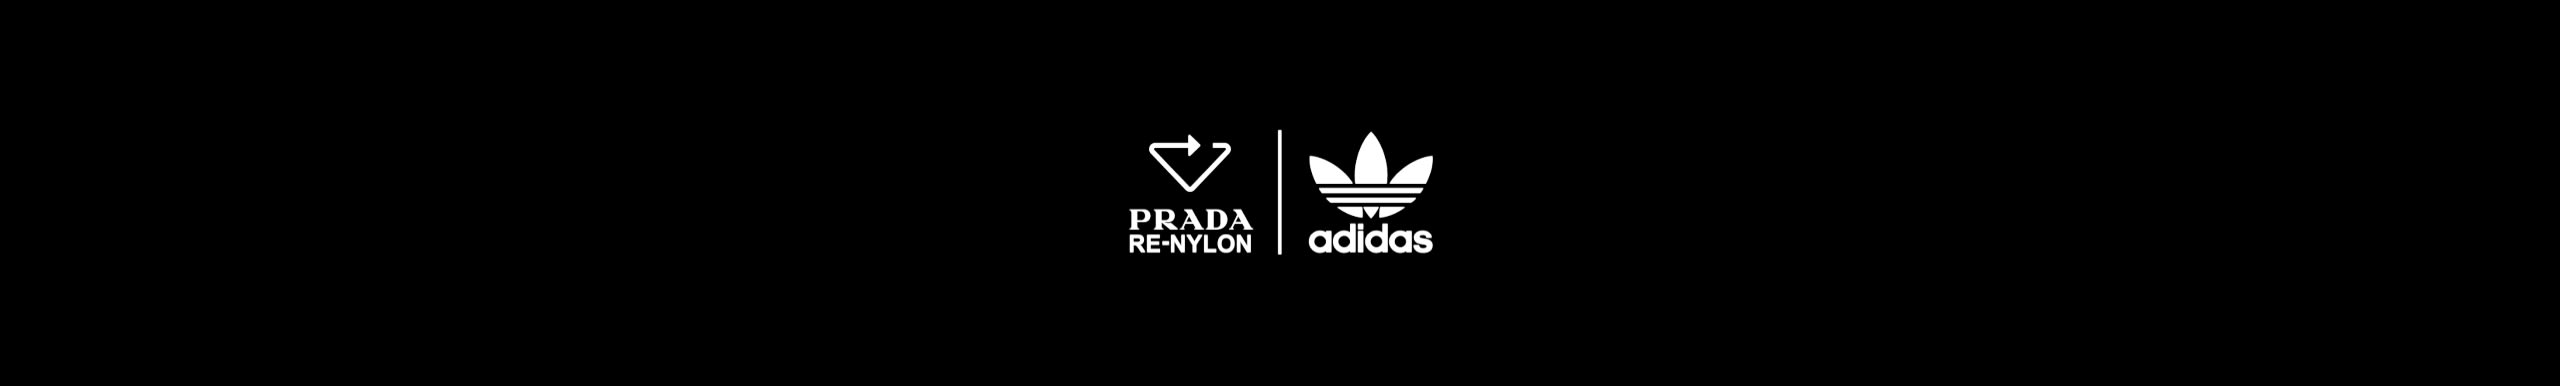 adidas by Prada Re-Nylon | adidas US